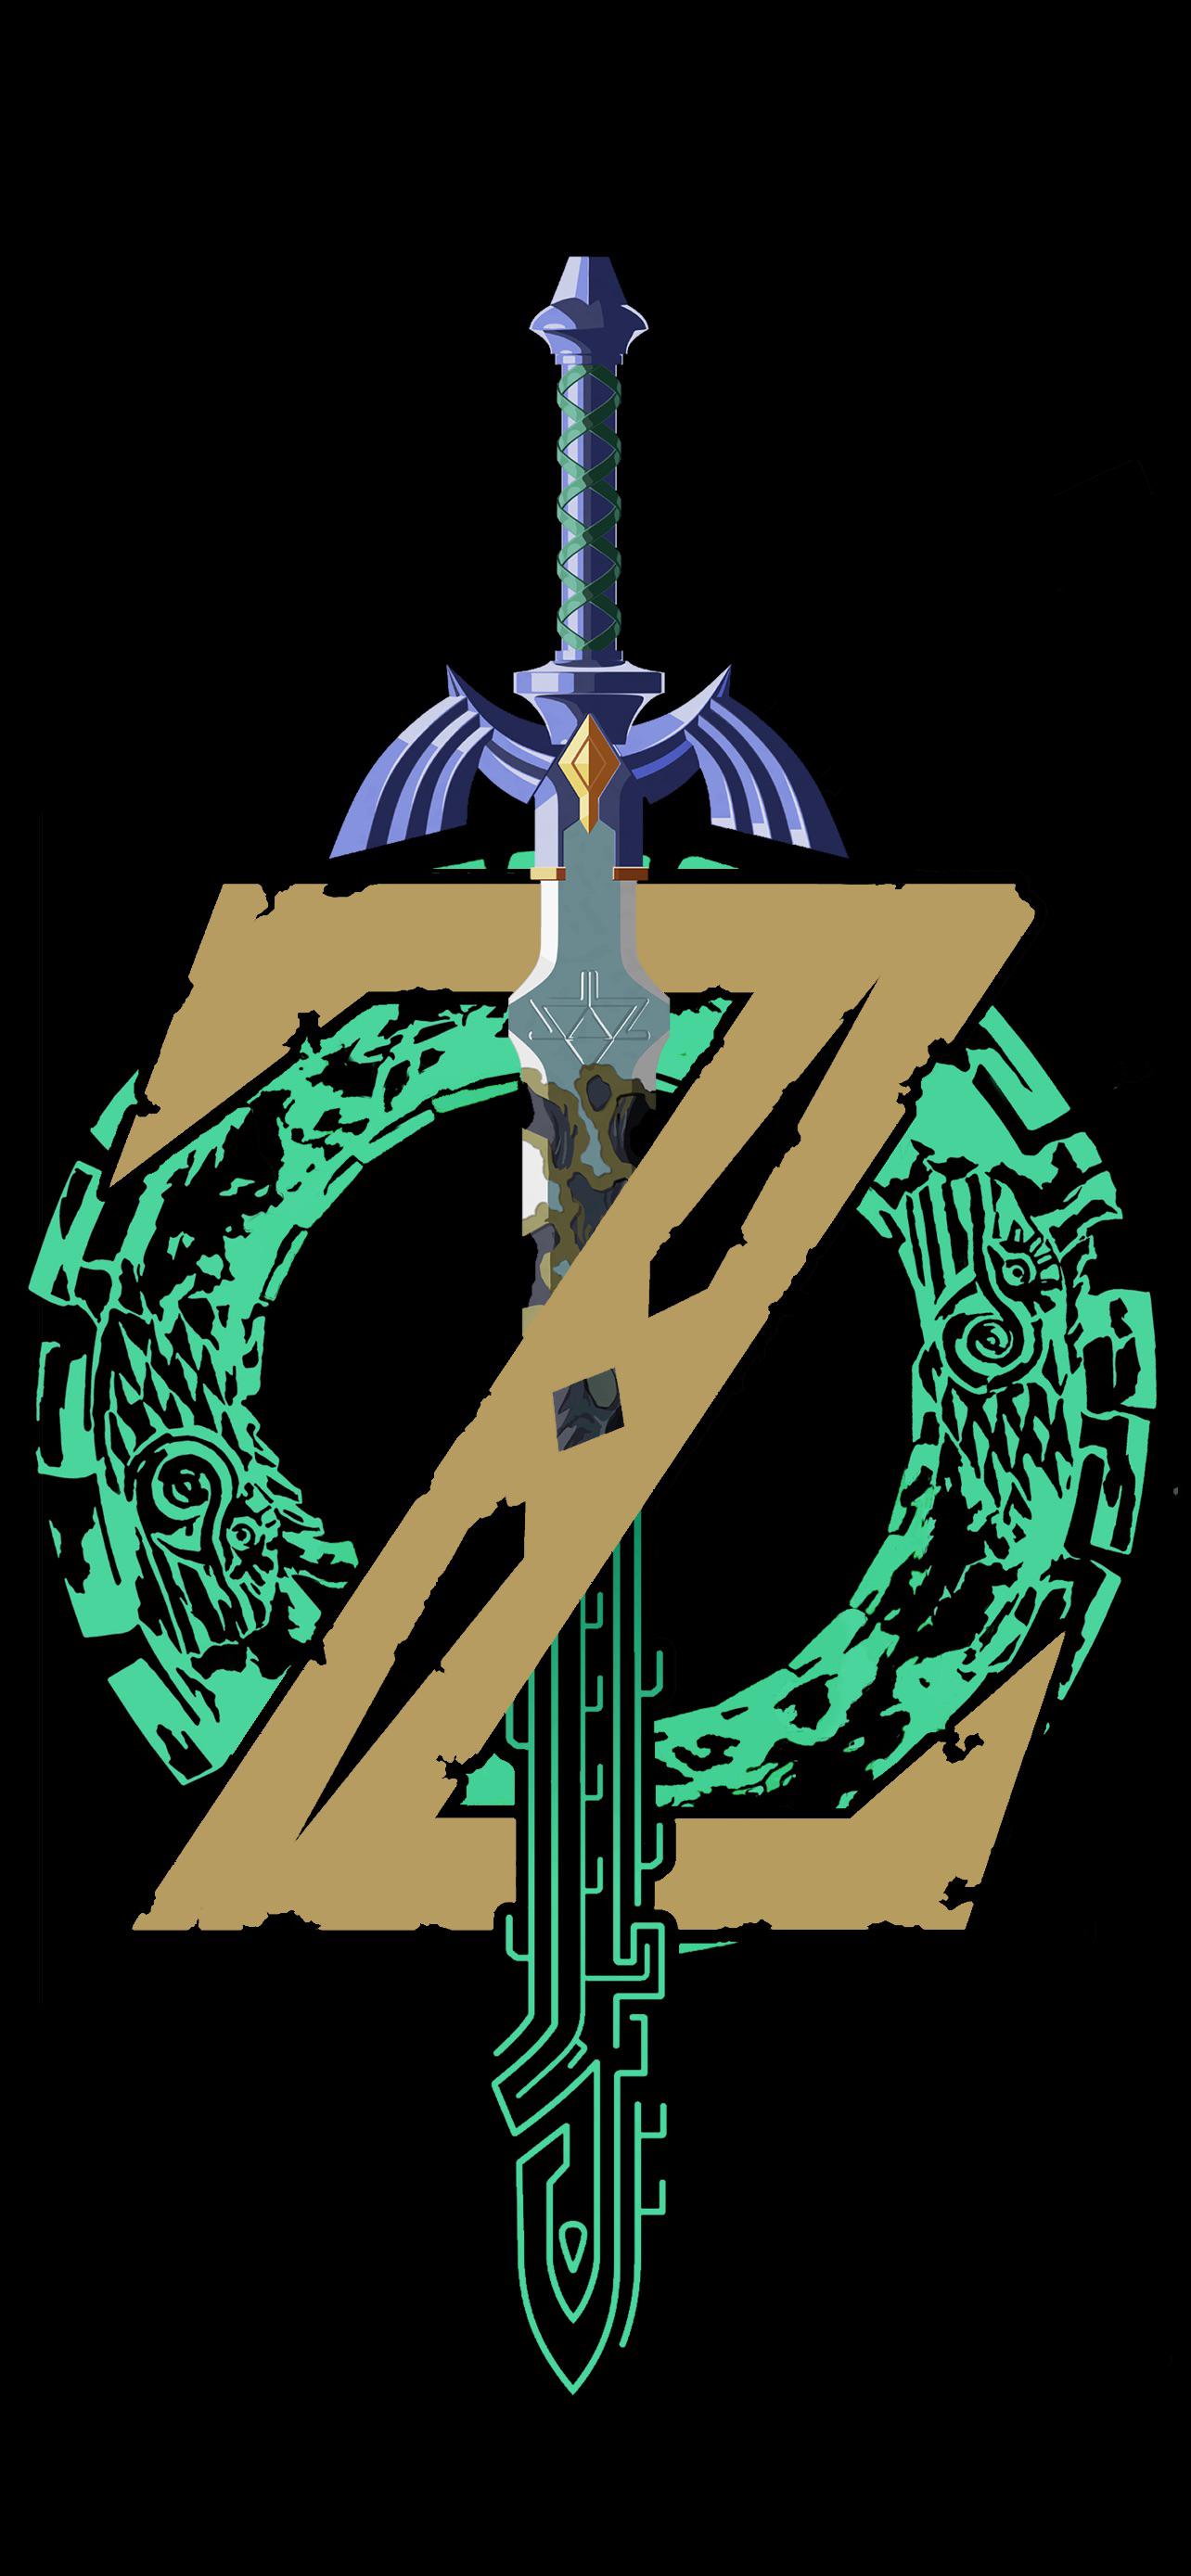 TotK] Zelda: Tears of the Kingdom wallpapers for phone / tablet : r/zelda